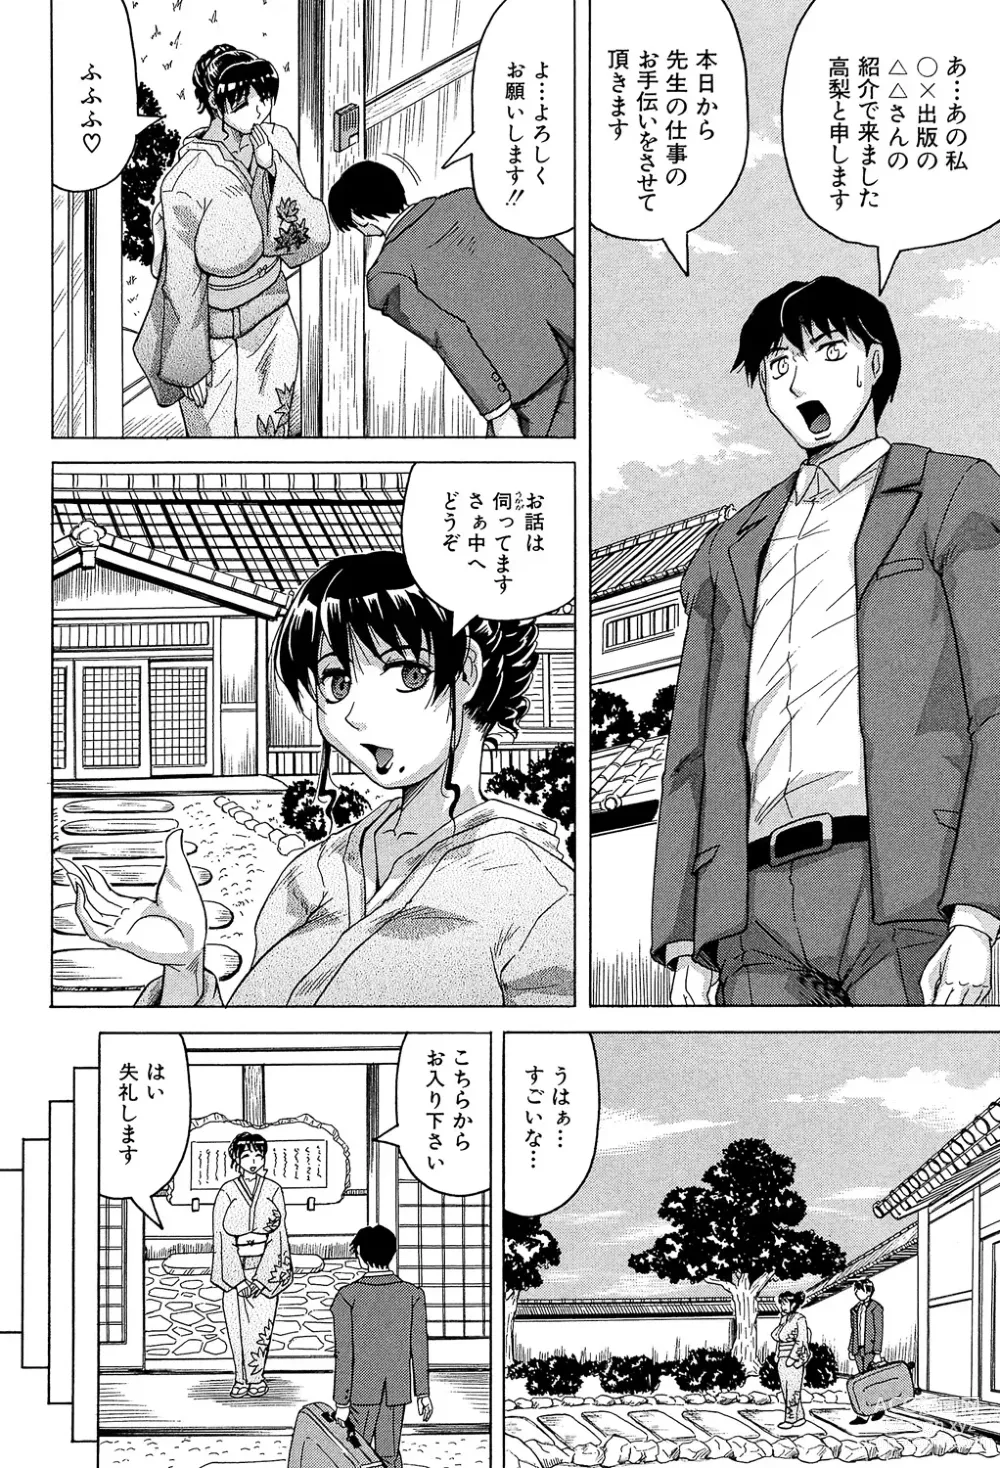 Page 8 of manga Oyako no Utage